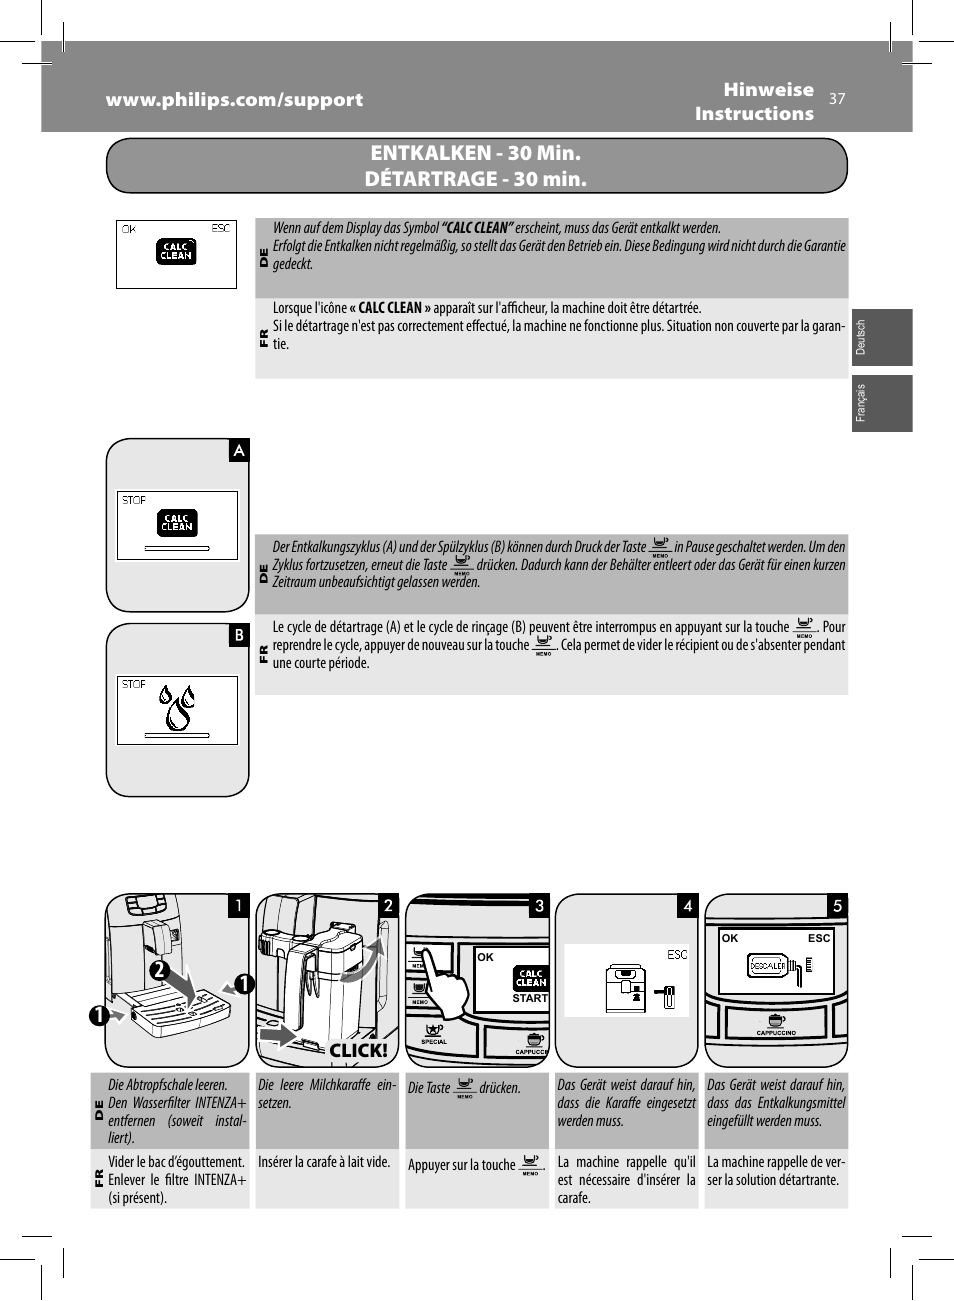 Entkalken - 30 min. détartrage - 30 min, Click | Philips Saeco  Kaffeevollautomat User Manual | Page 37 / 68 | Original mode